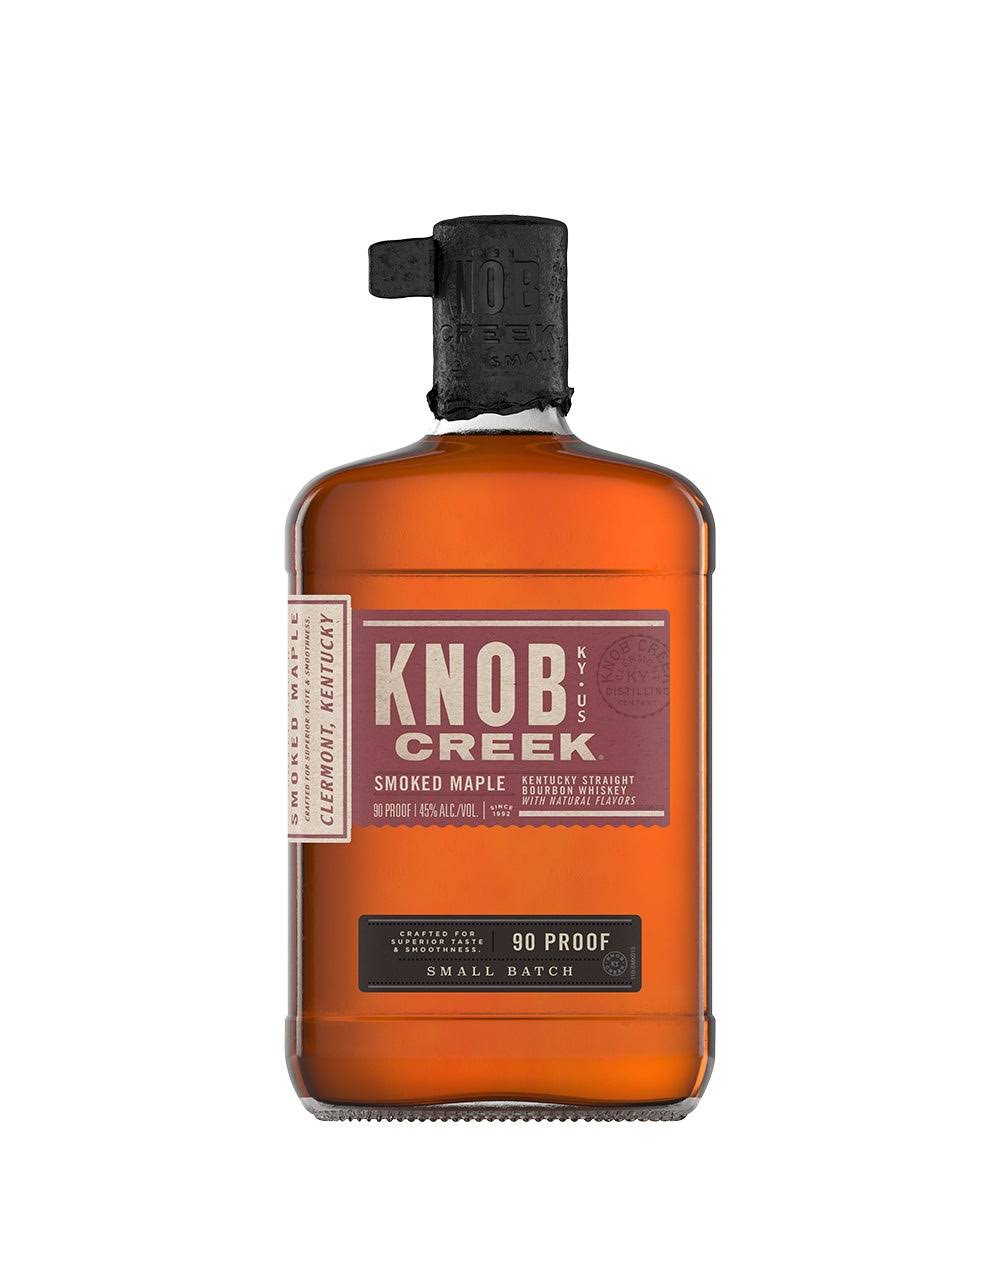 Knob Creek Smoked Maple Kentucky Straight Bourbon Whiskey